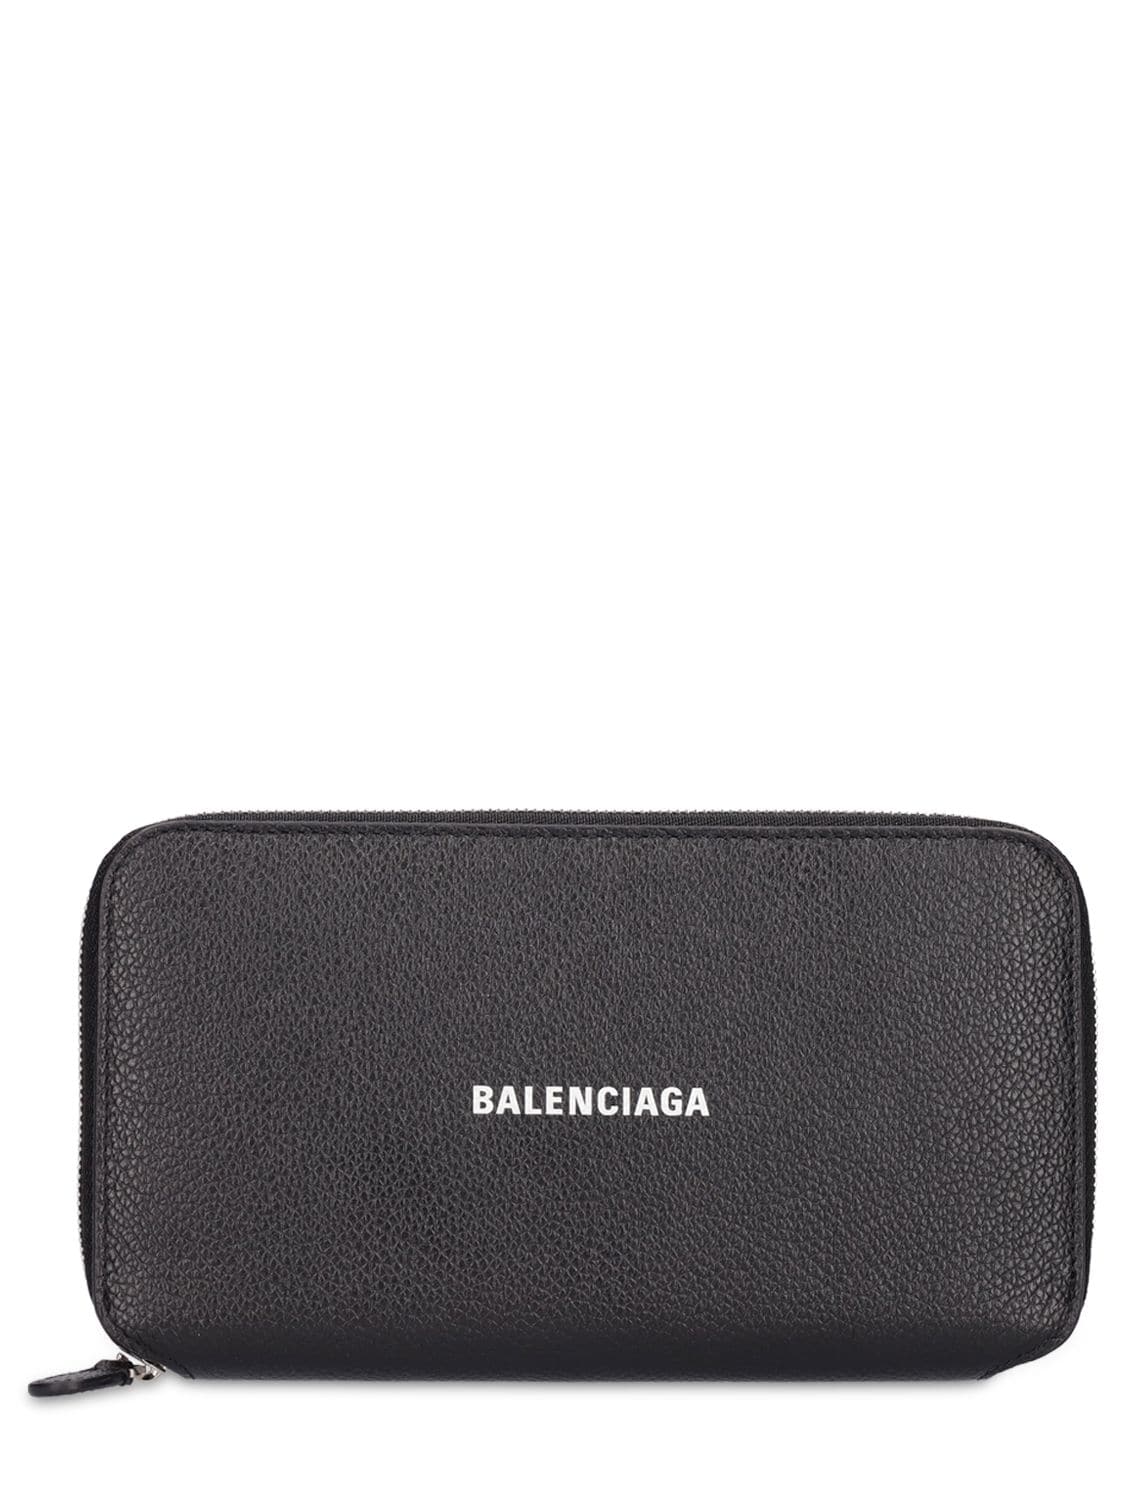 Balenciaga Cash Leather Zip-around Wallet In Black